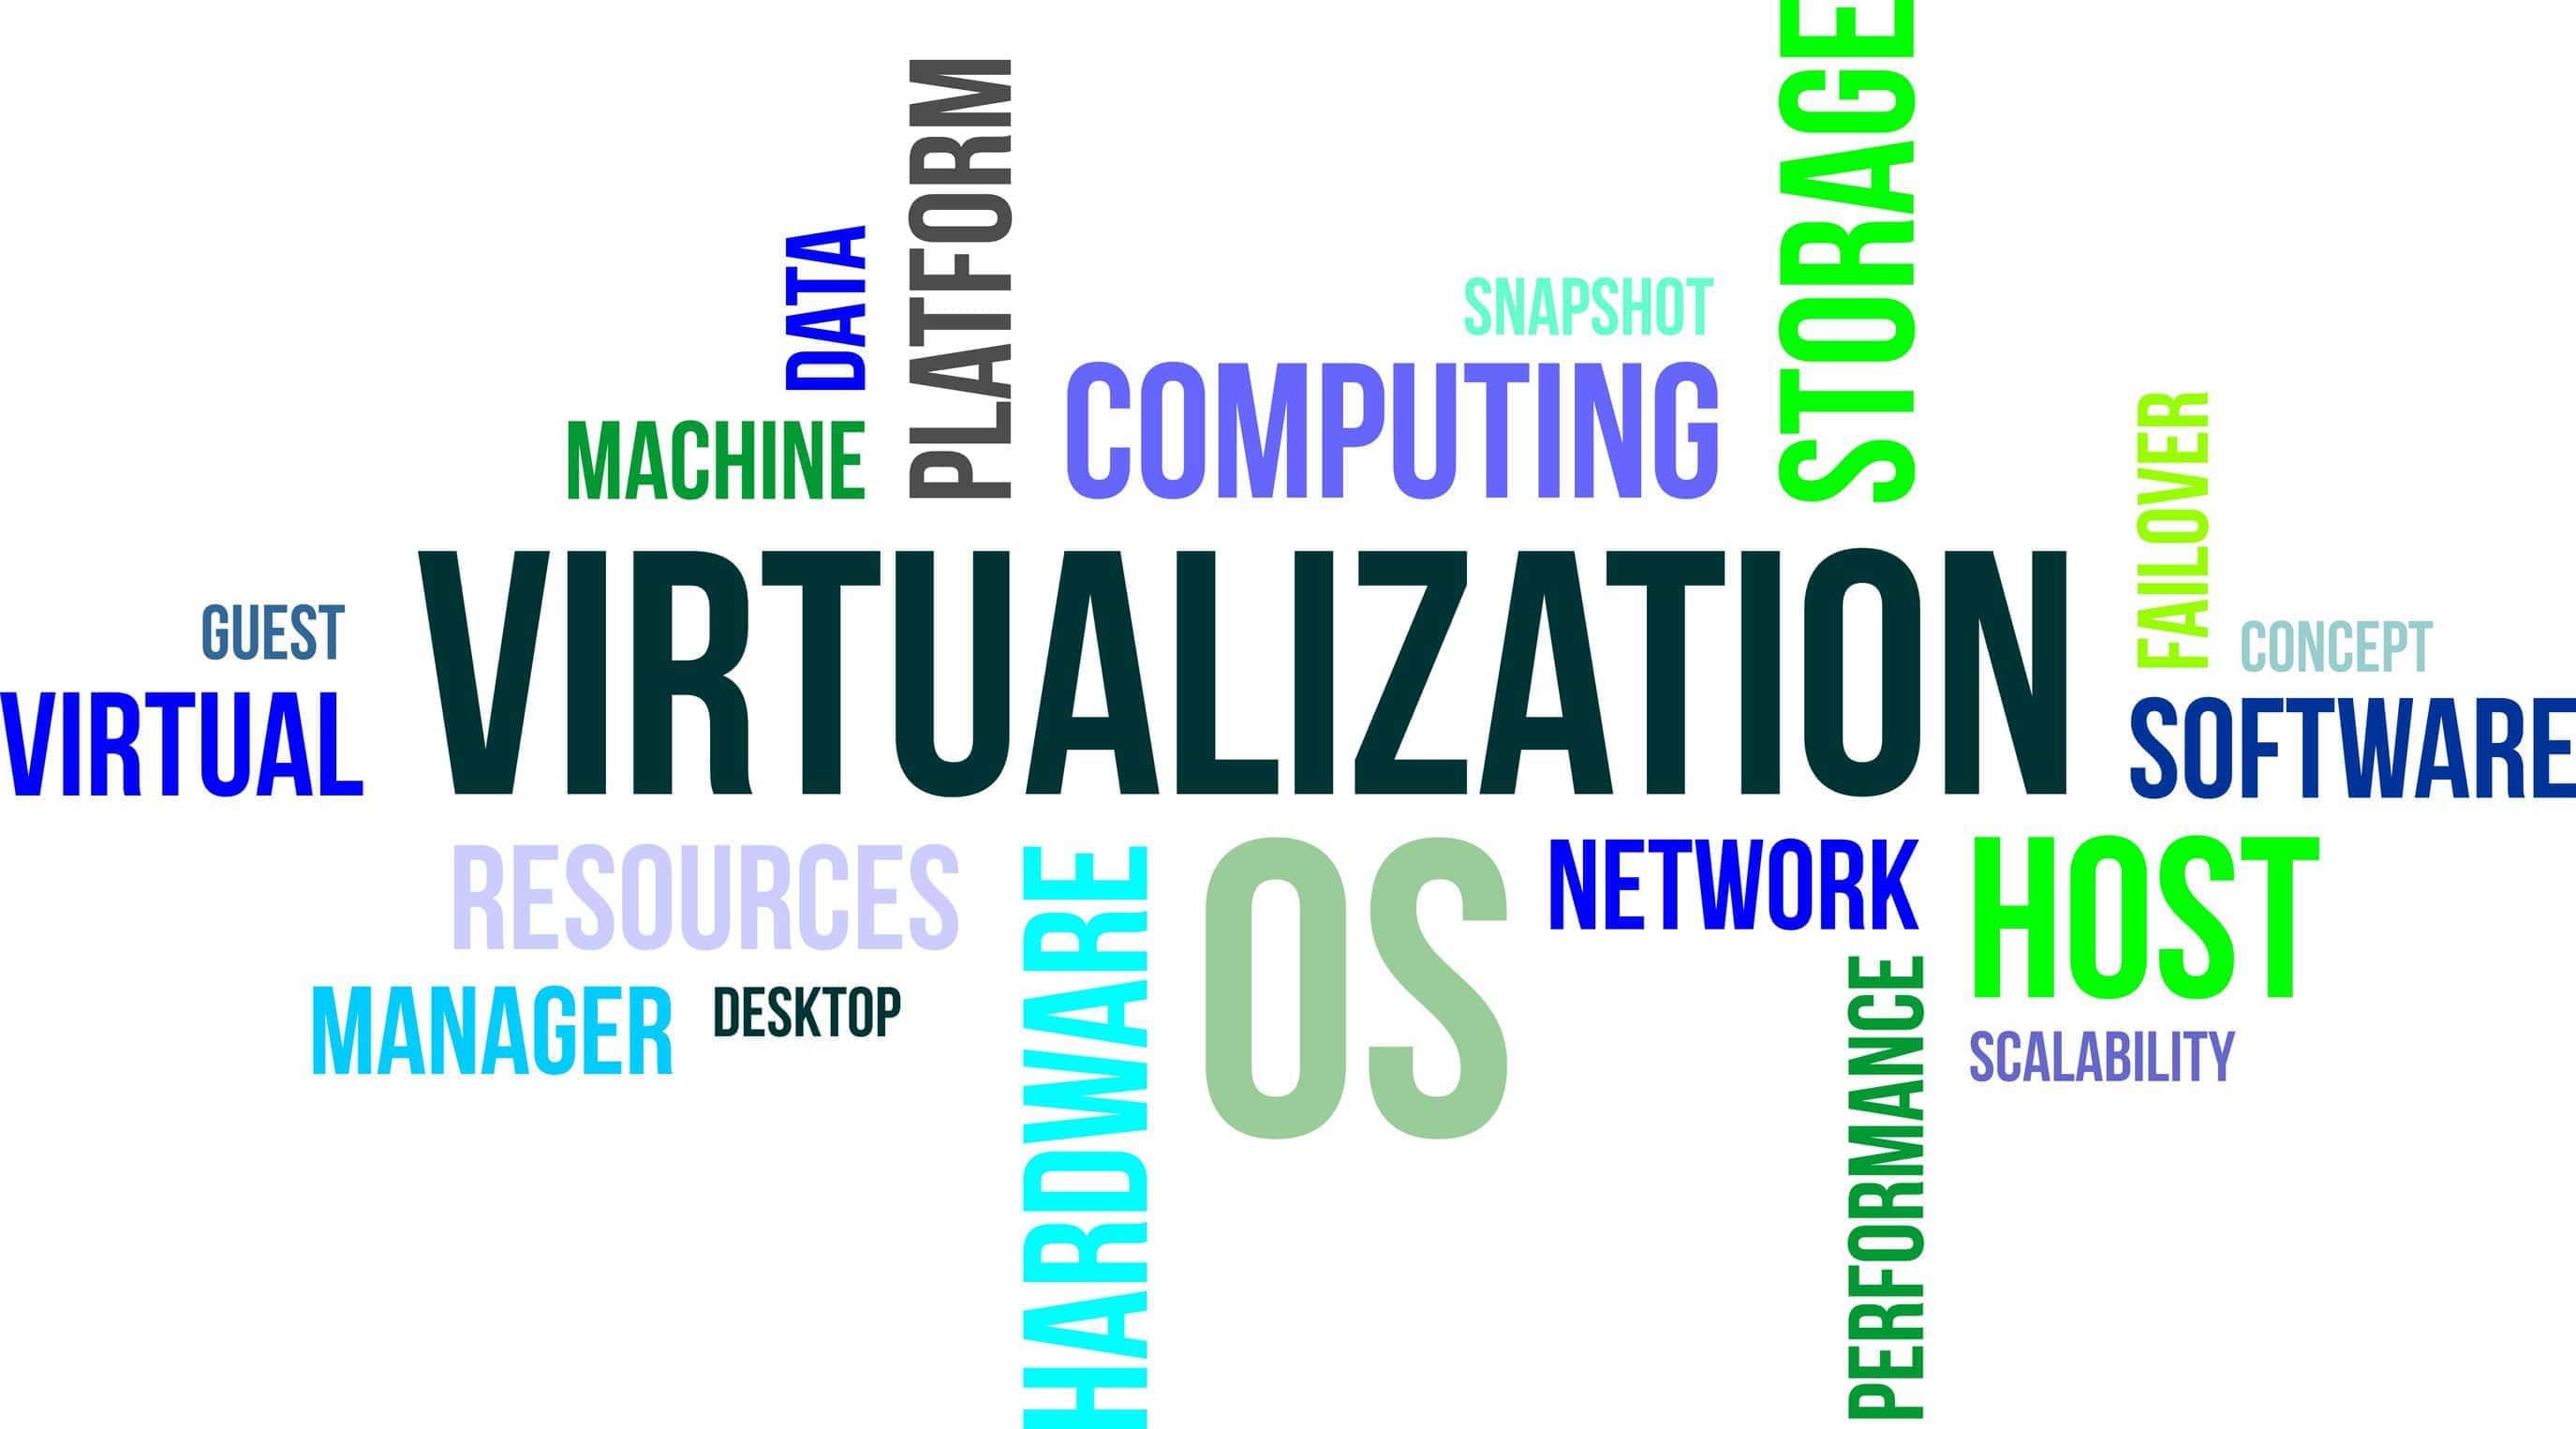 Virtualization Storage Models and Architecture